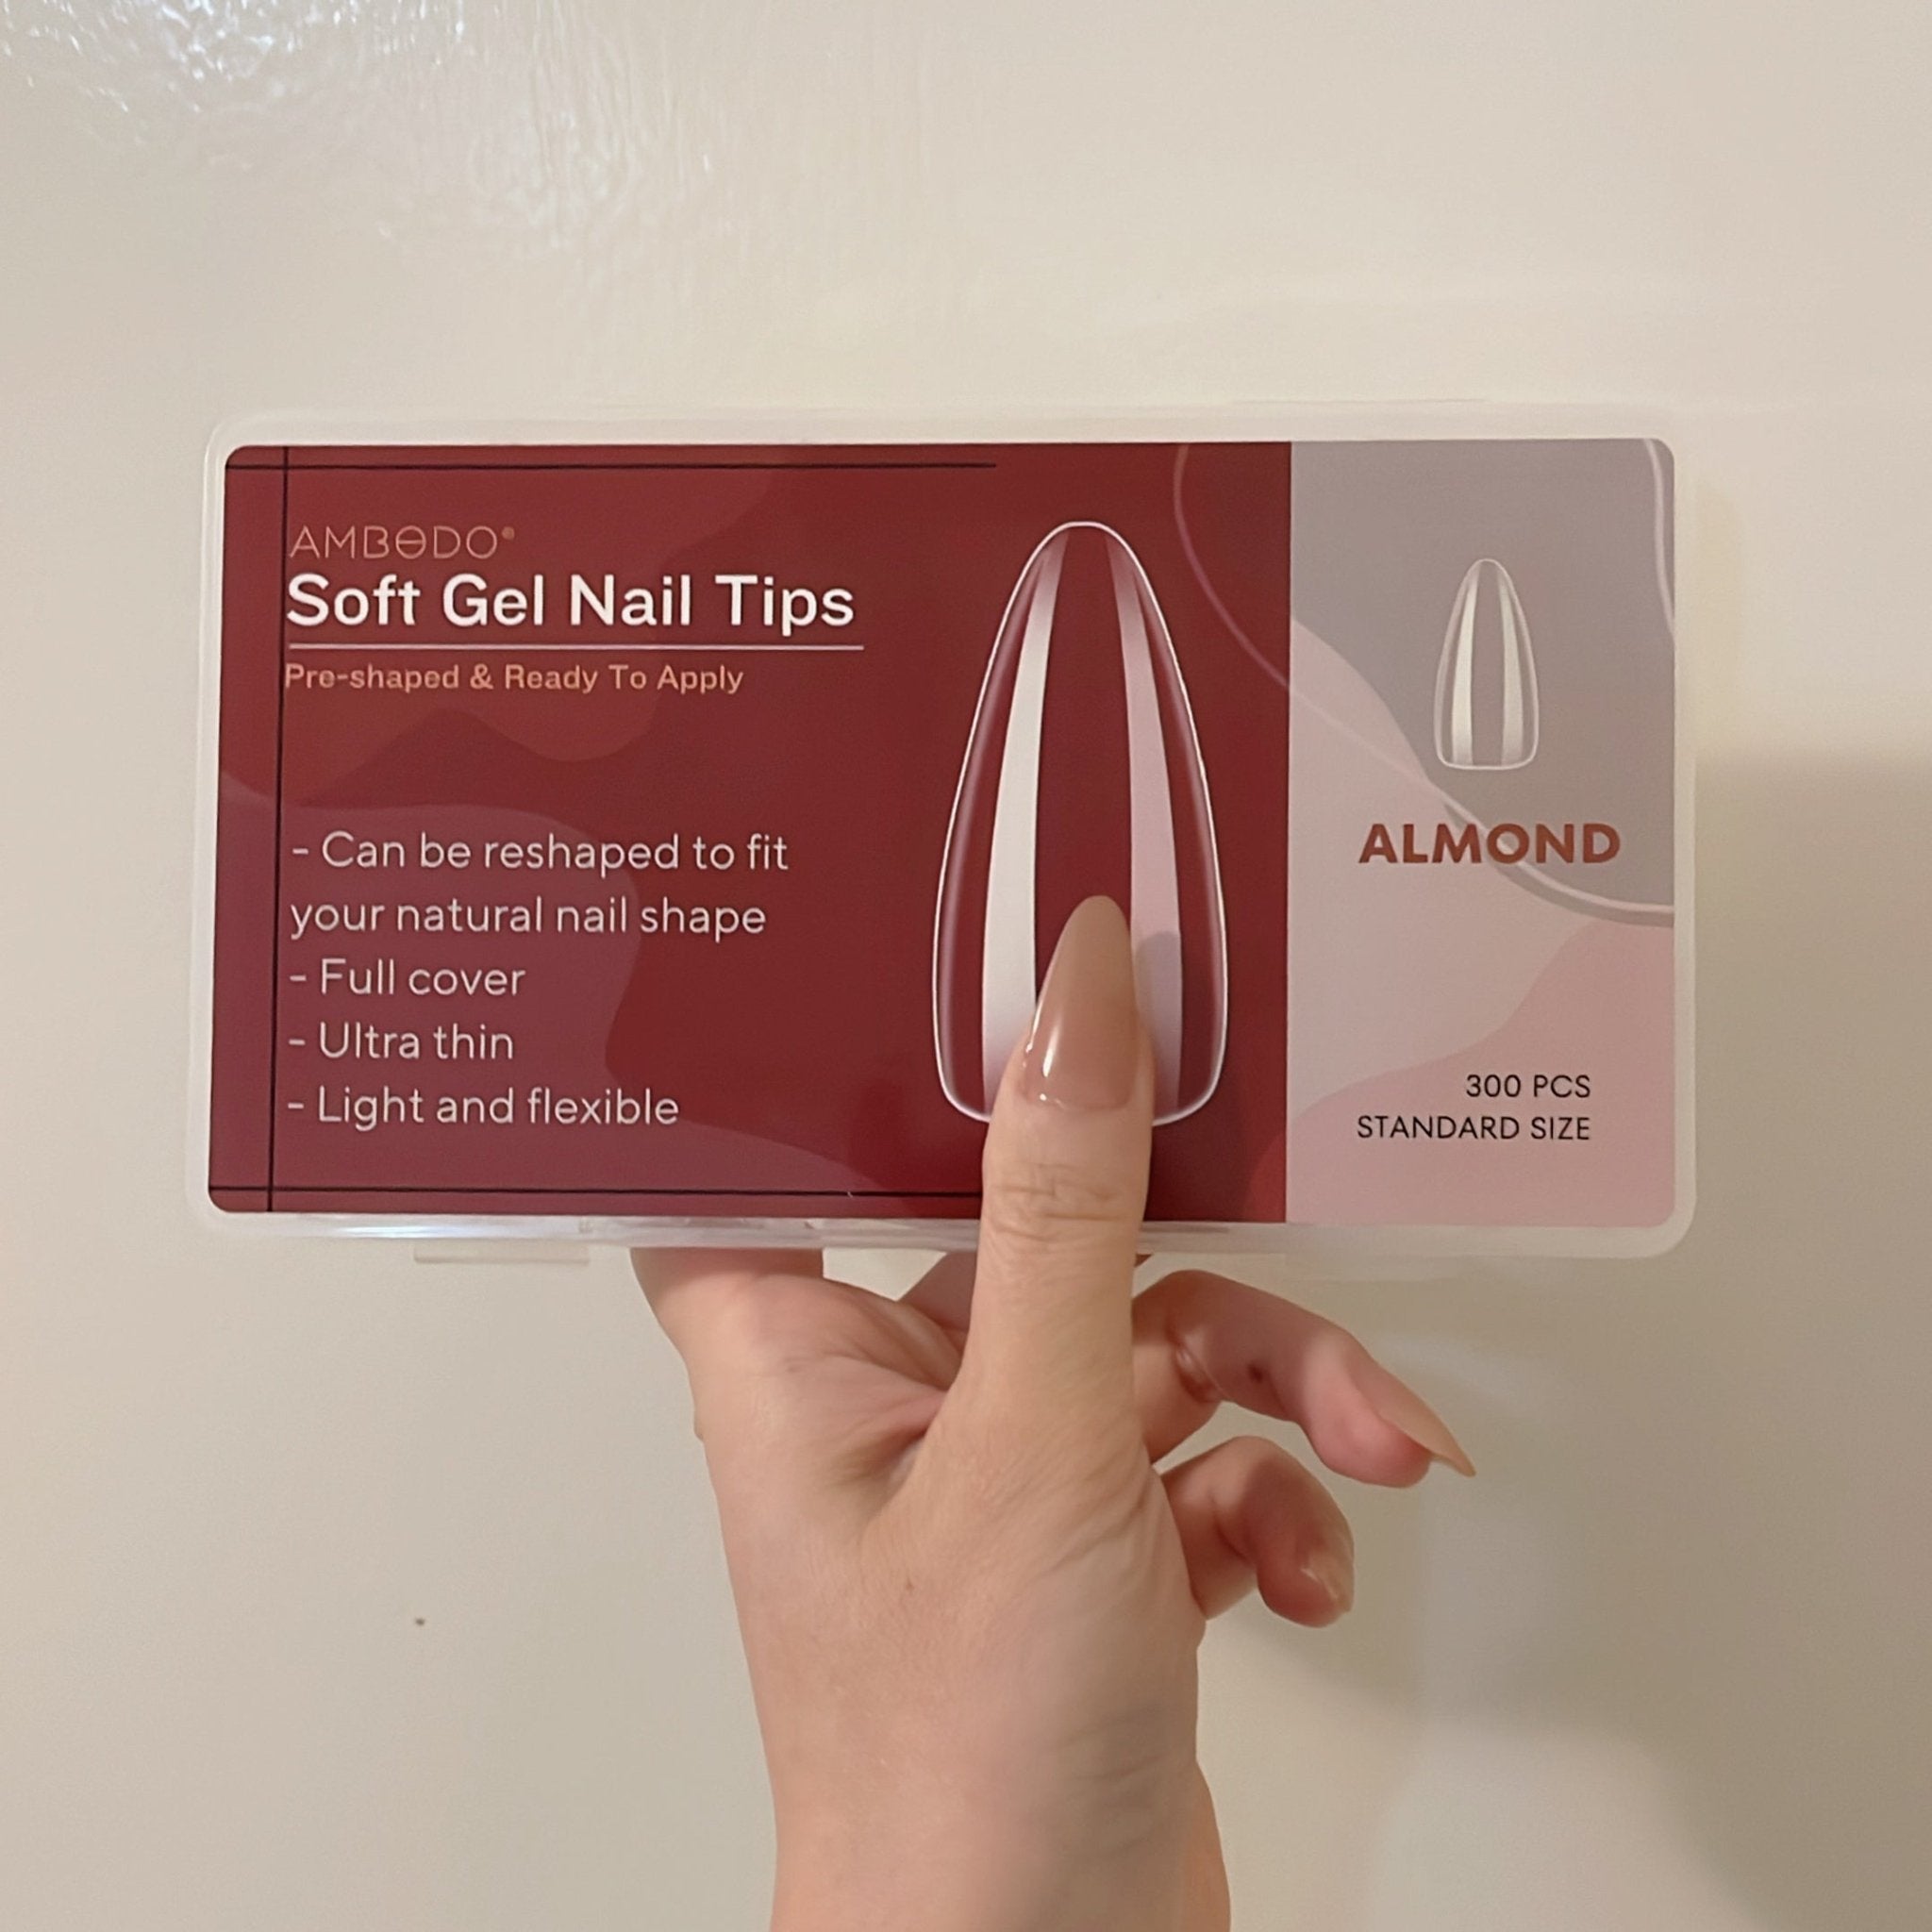 300pcs Ultra - Thin Nail Extension Soft Nail Tips - Almond - Ambedobeauty